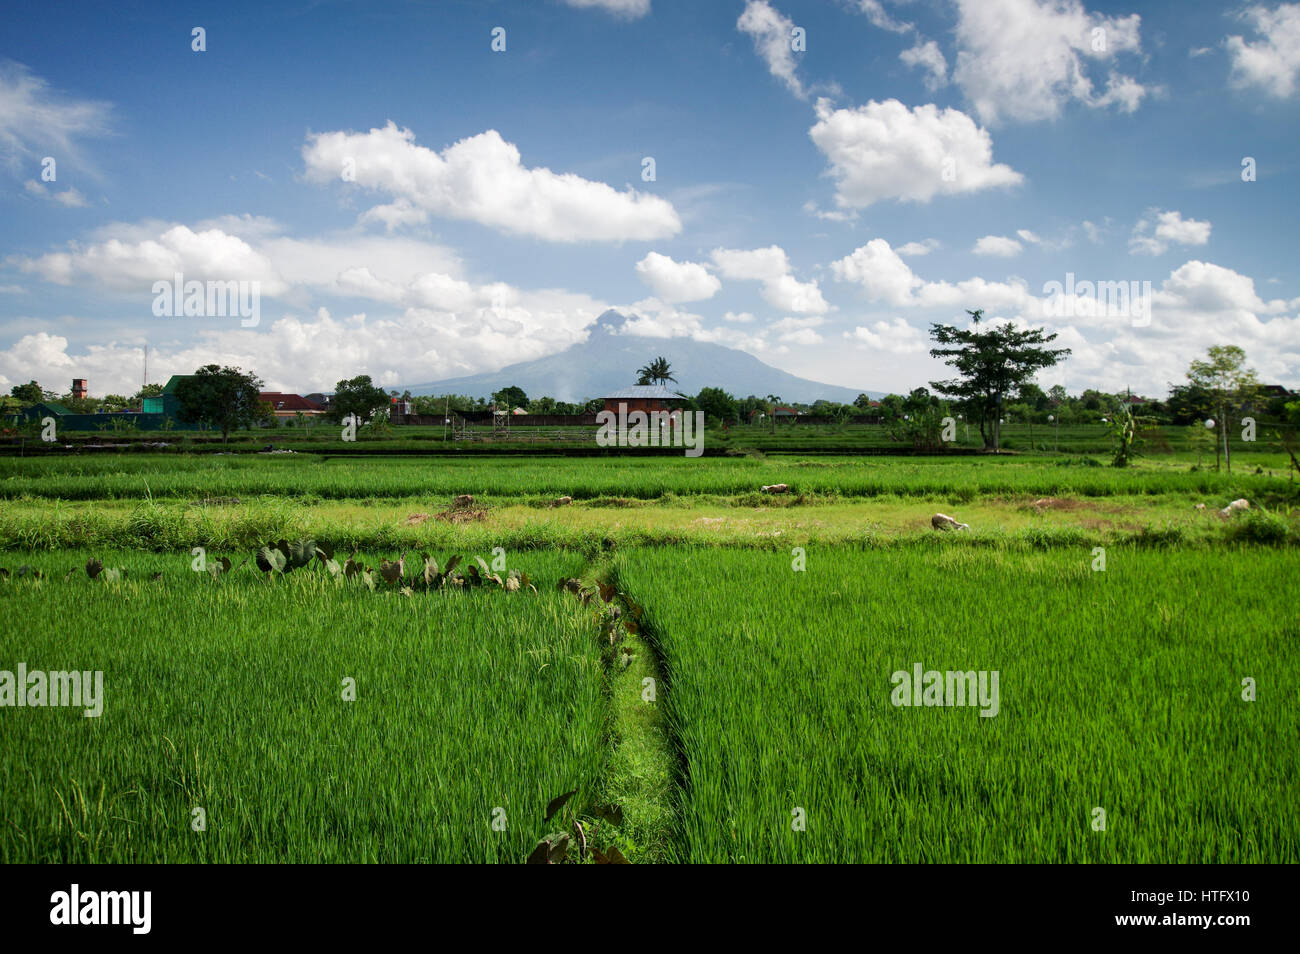 Gunung Merapi volcano towering over rice fields on the outskirts of Yogyakarta - Central Java, Indonesia Stock Photo